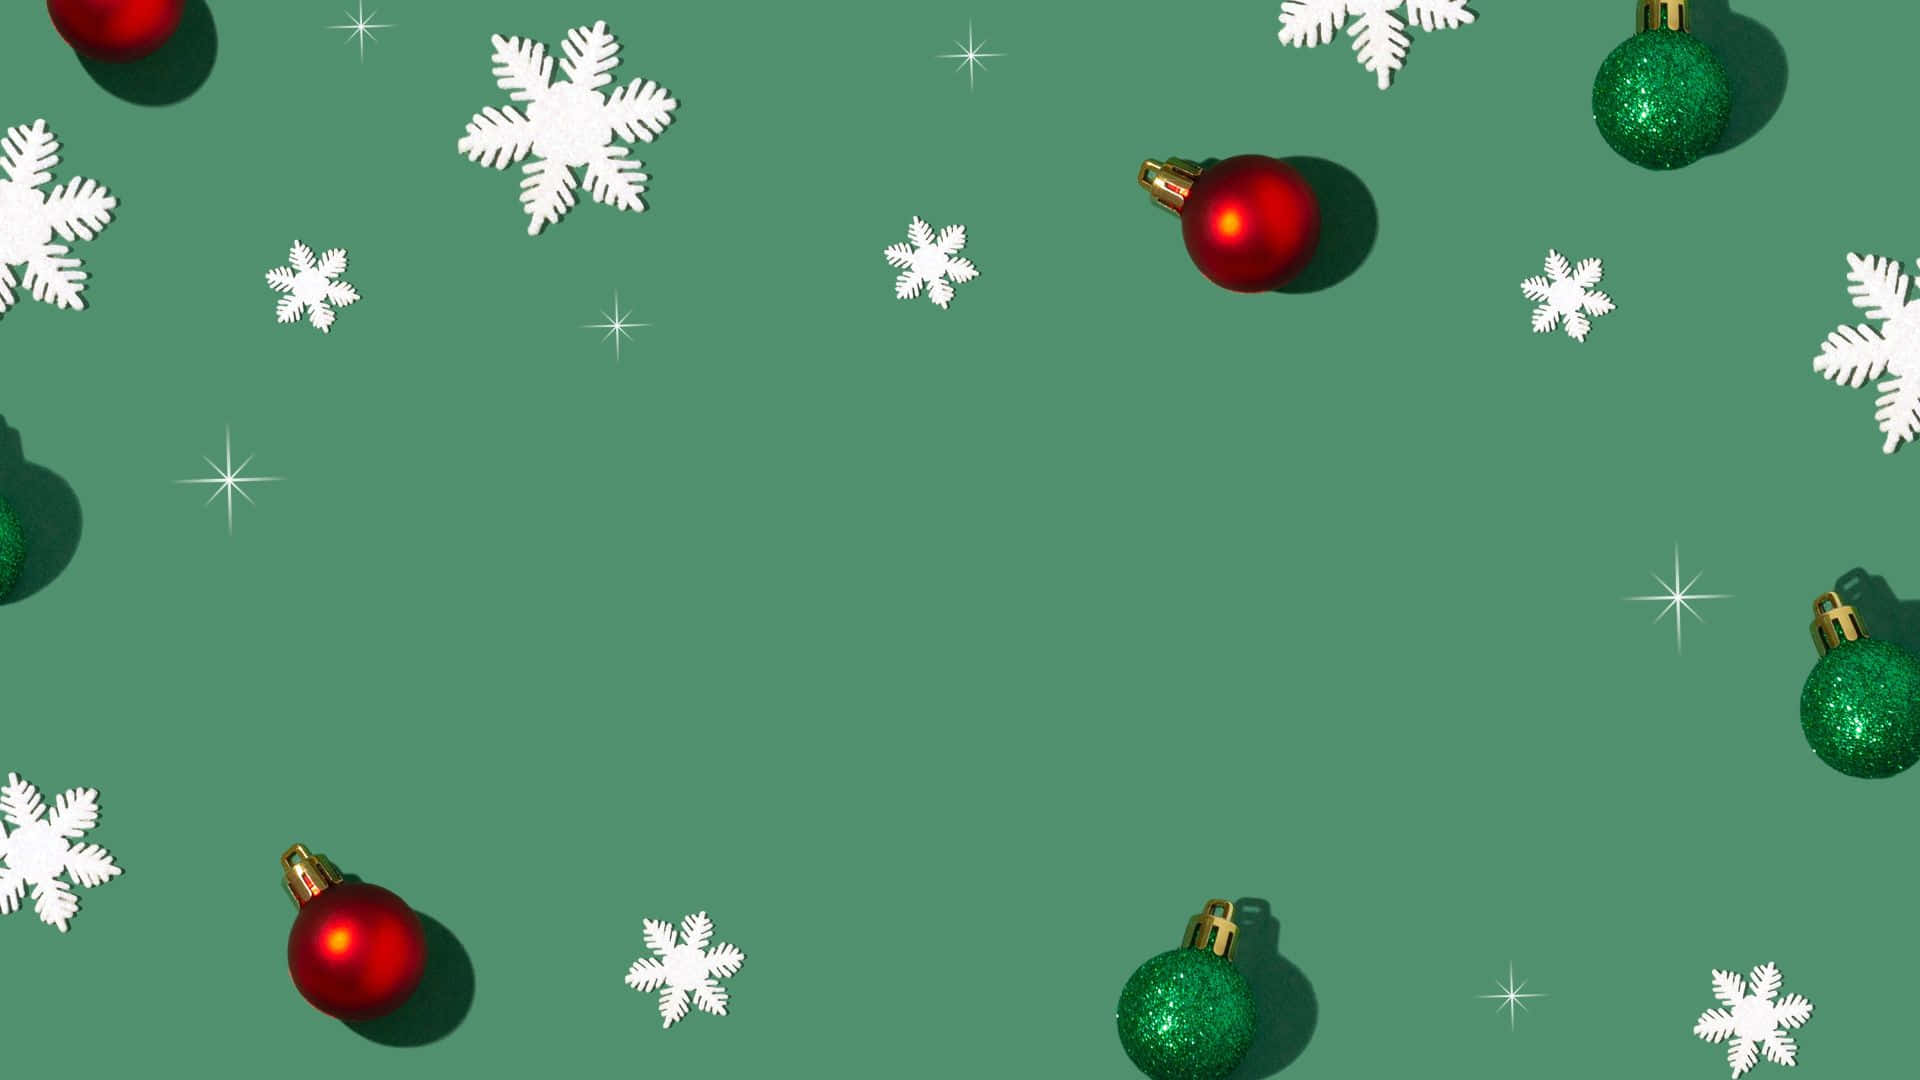 Spread Christmas cheer with Microsoft Teams this holiday season.